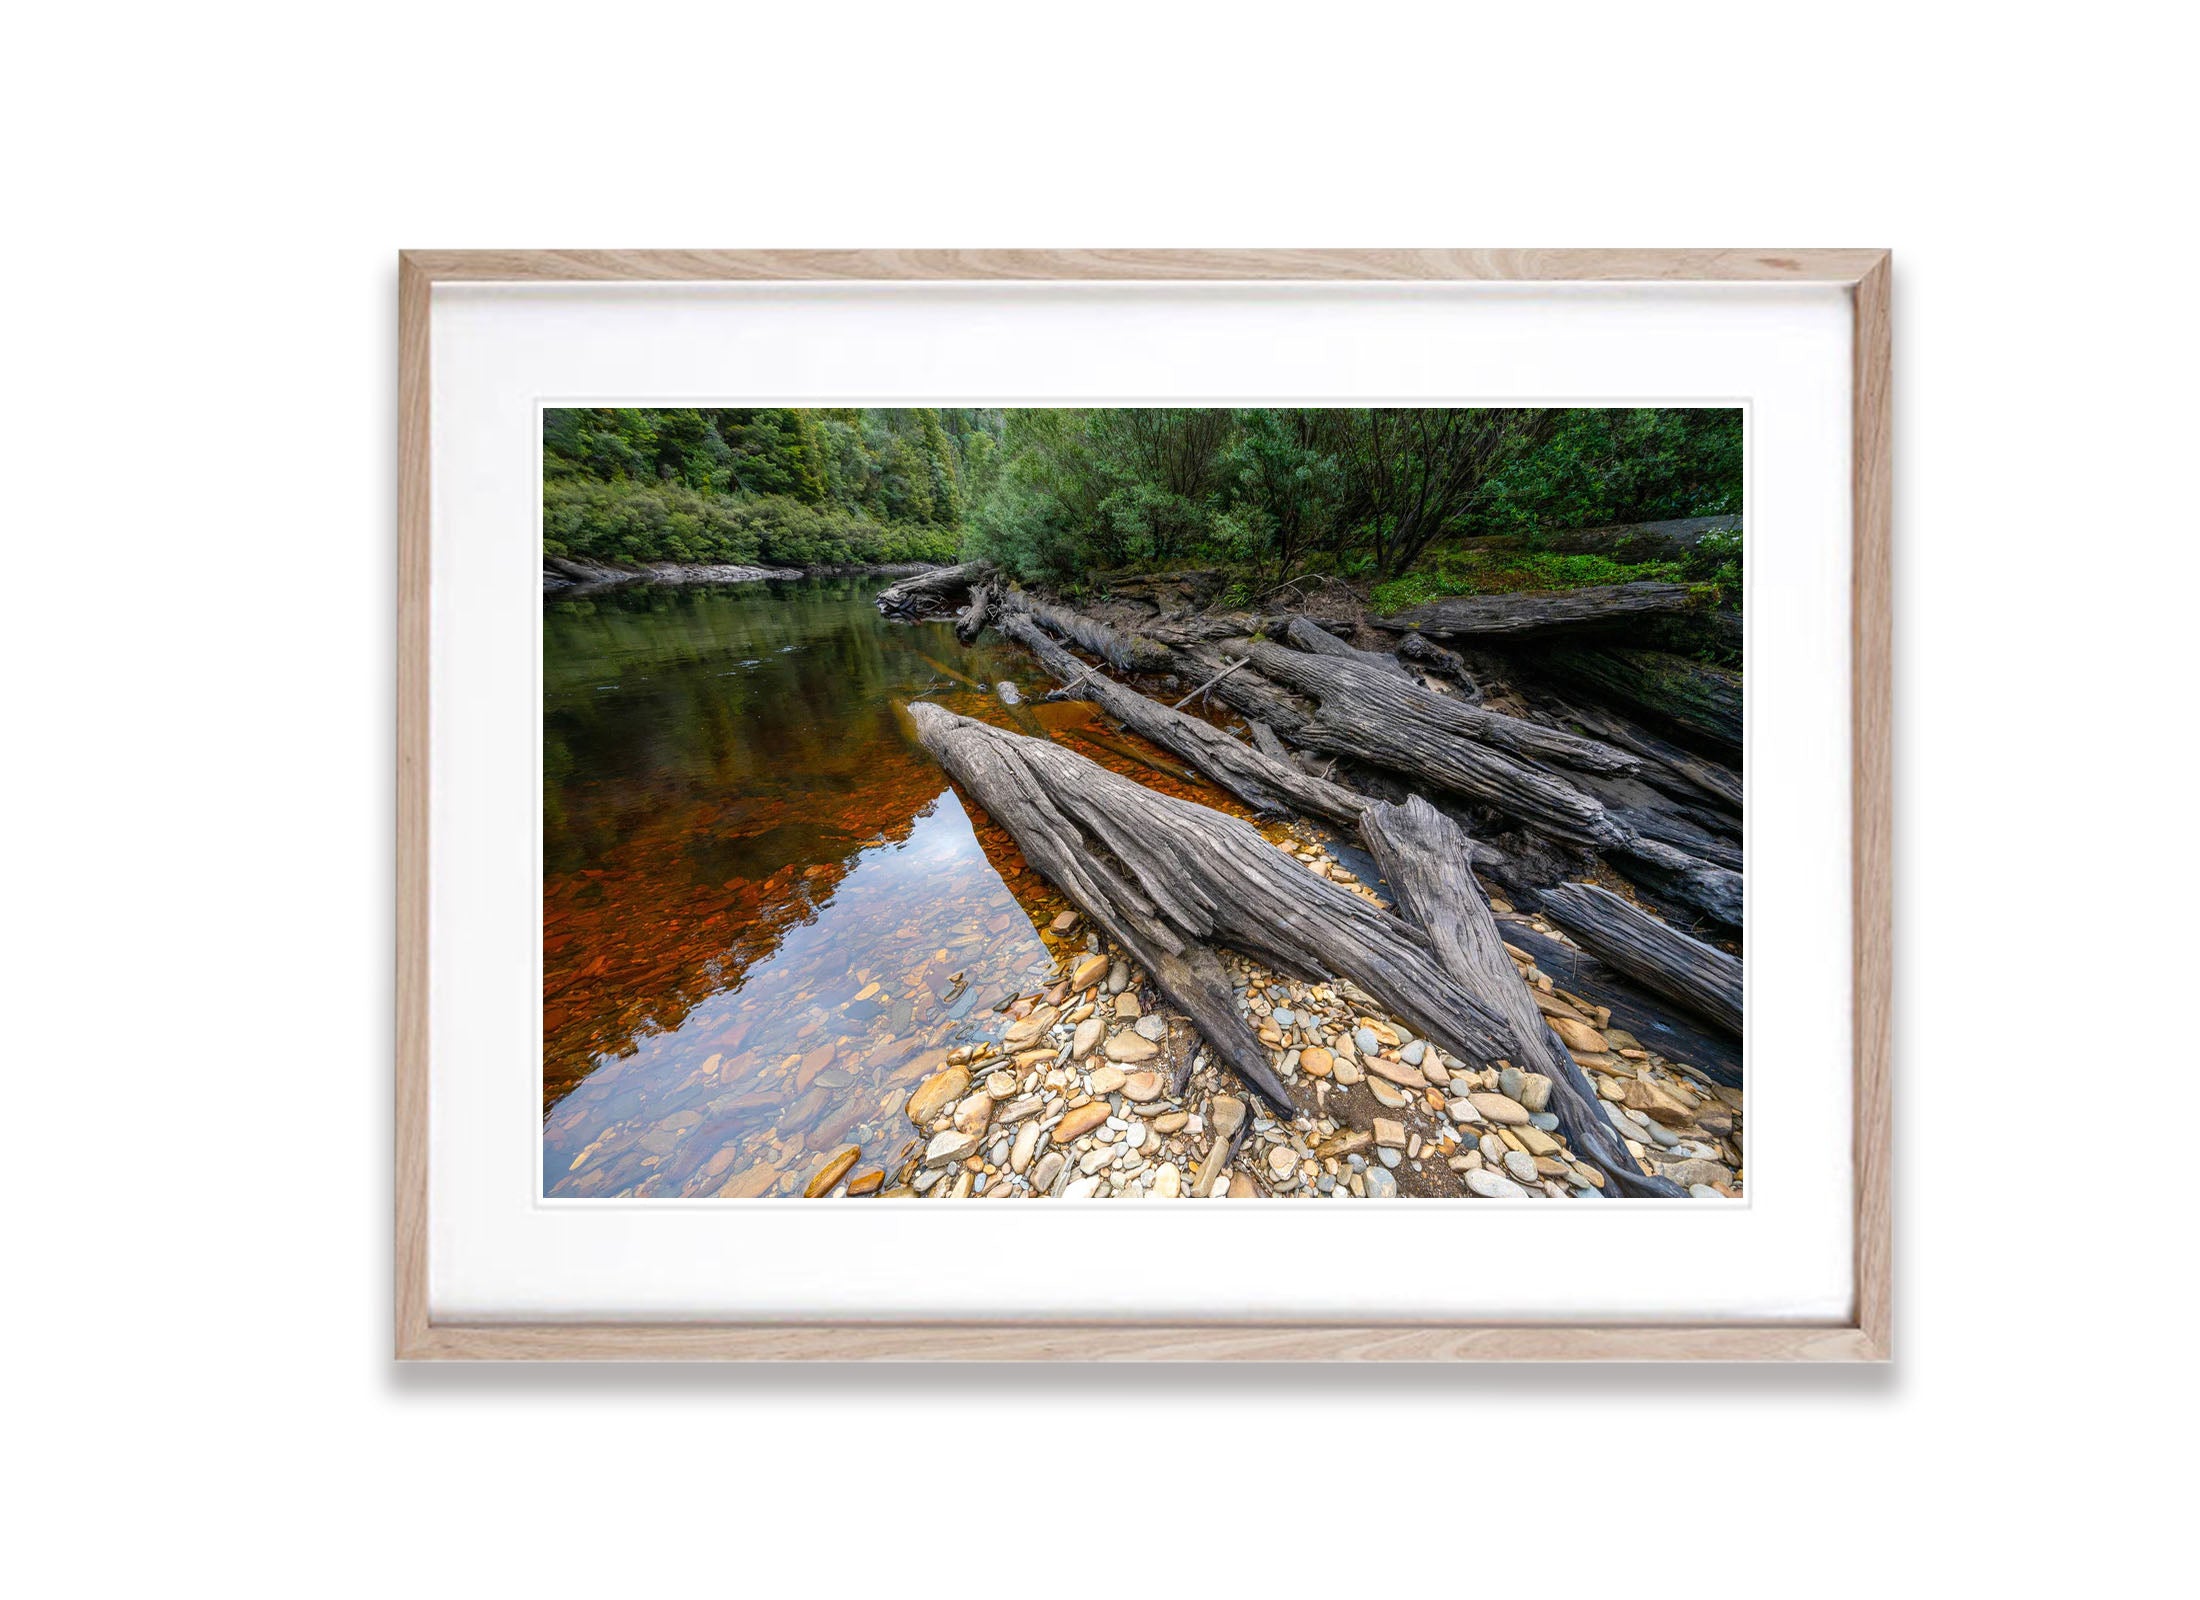 Logs on the The Franklin River #5, Tasmania